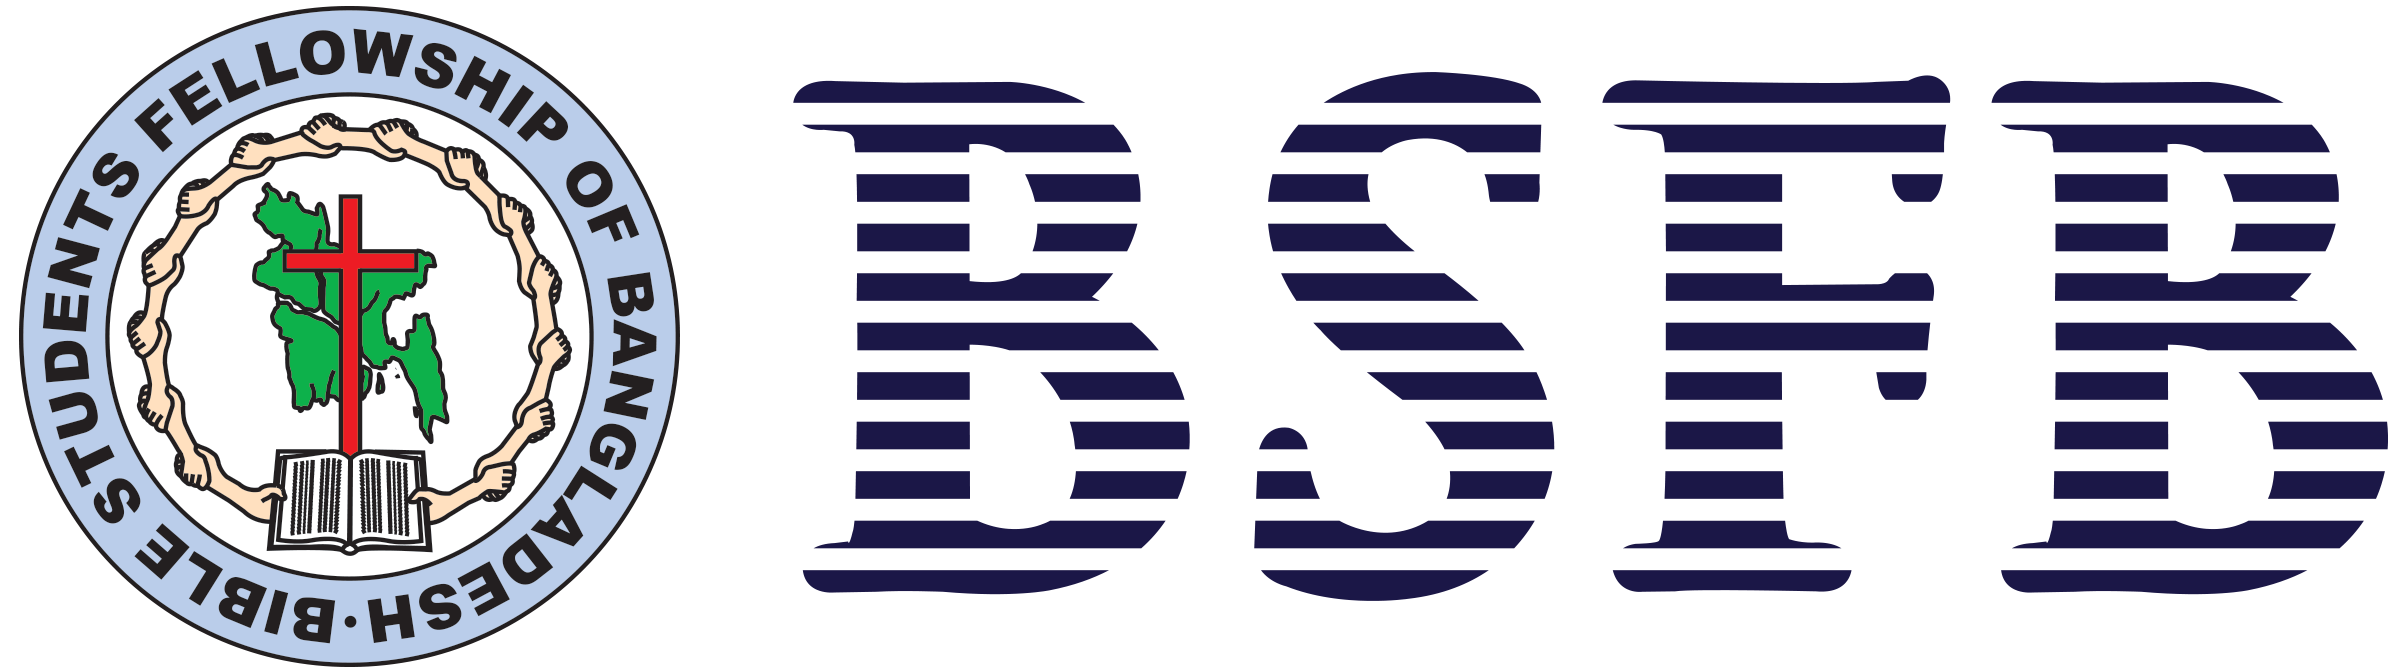 BSFB logo - PNG Format